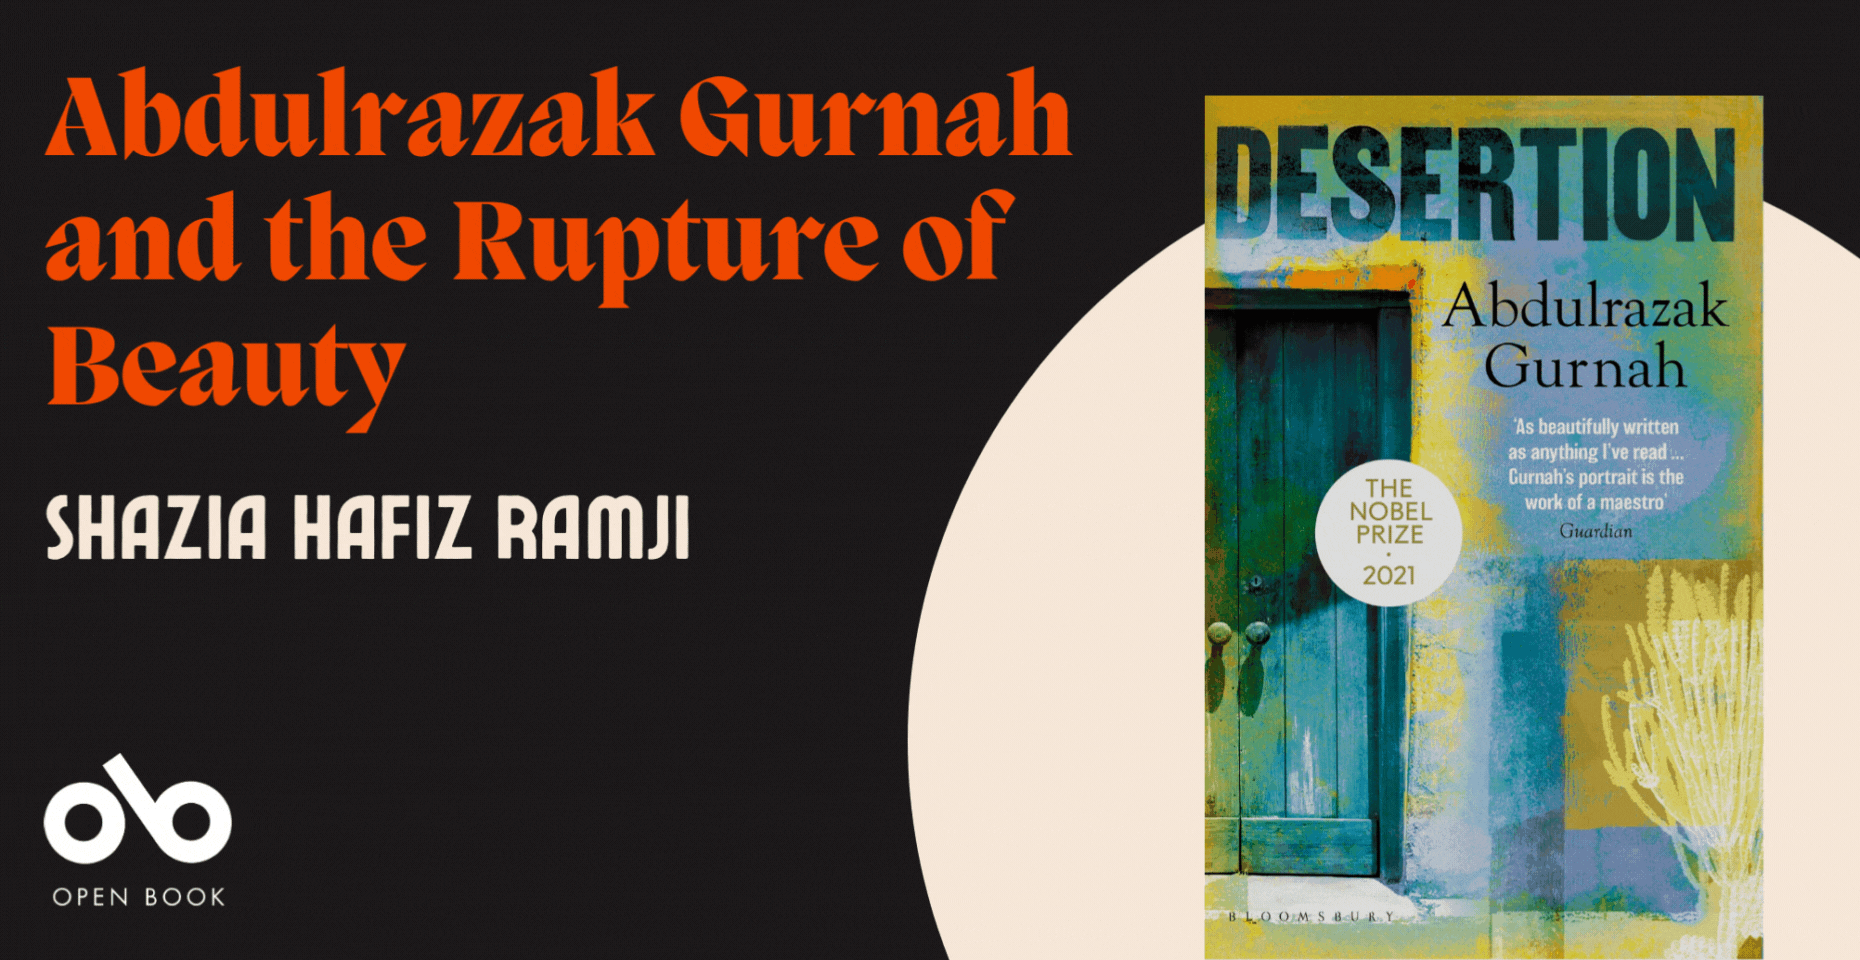 Abdulrazak Gurnah and the Rupture of Beauty